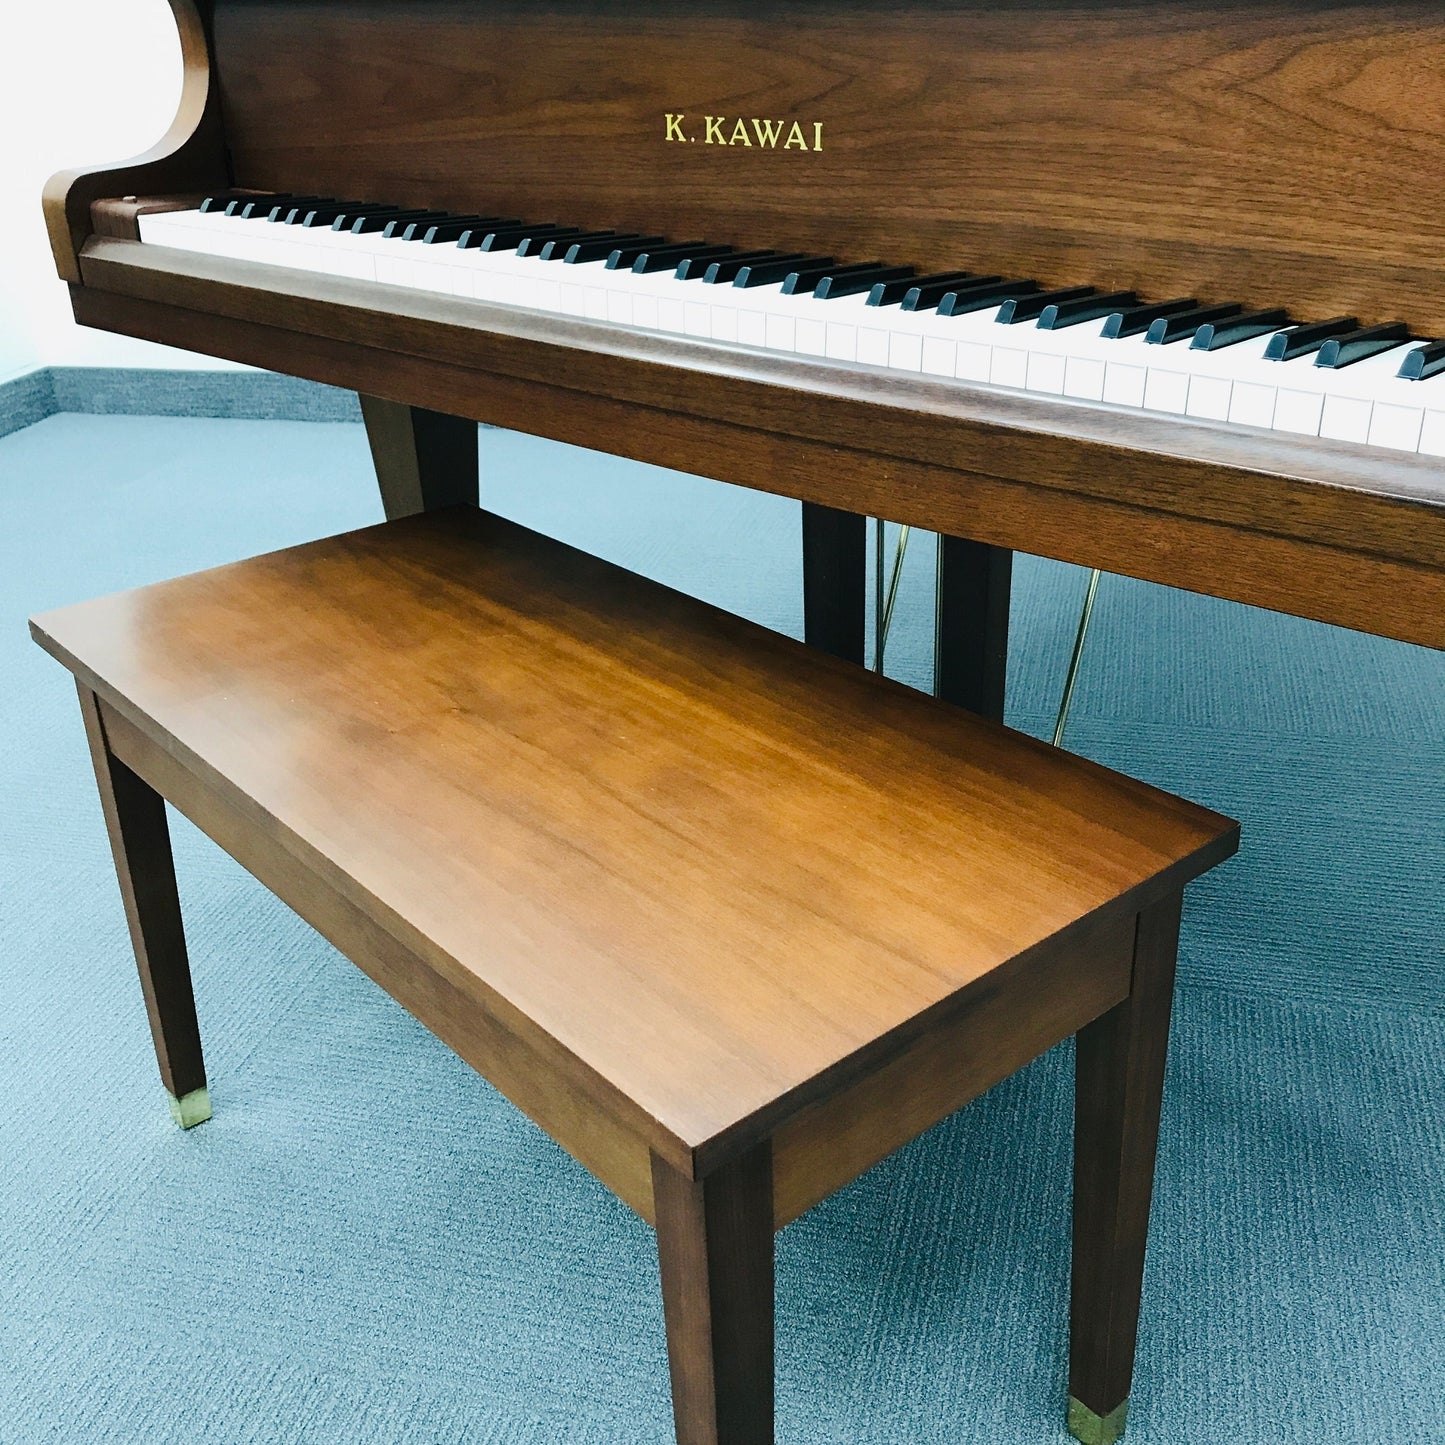 Kawai GS-40 Grand Piano